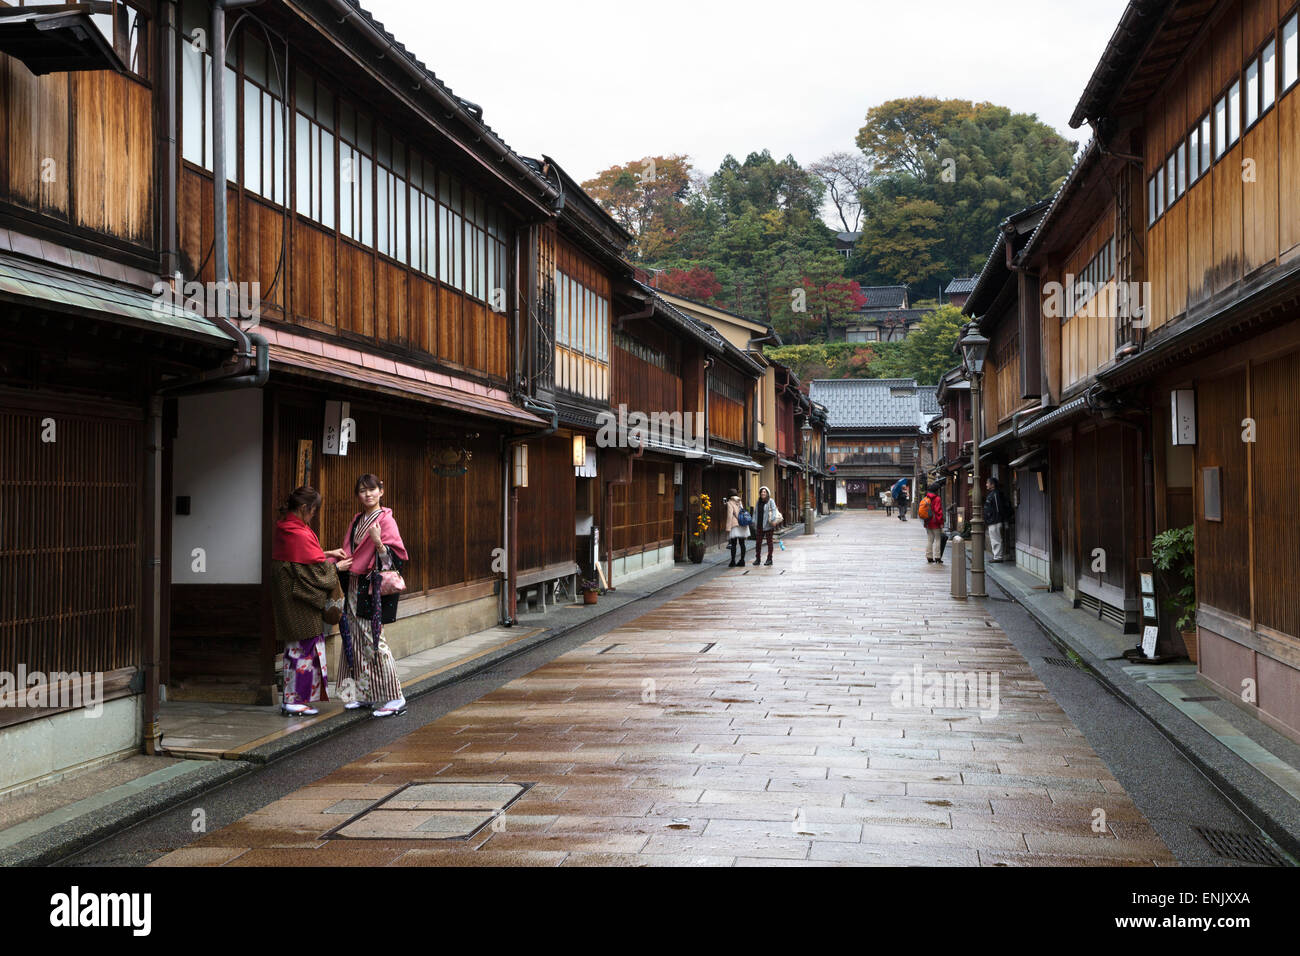 Holzhäuser, Higashi Chaya Bezirk (Geisha), Kanazawa, Präfektur Ishikawa, zentralen Honshu, Japan, Asien Stockfoto